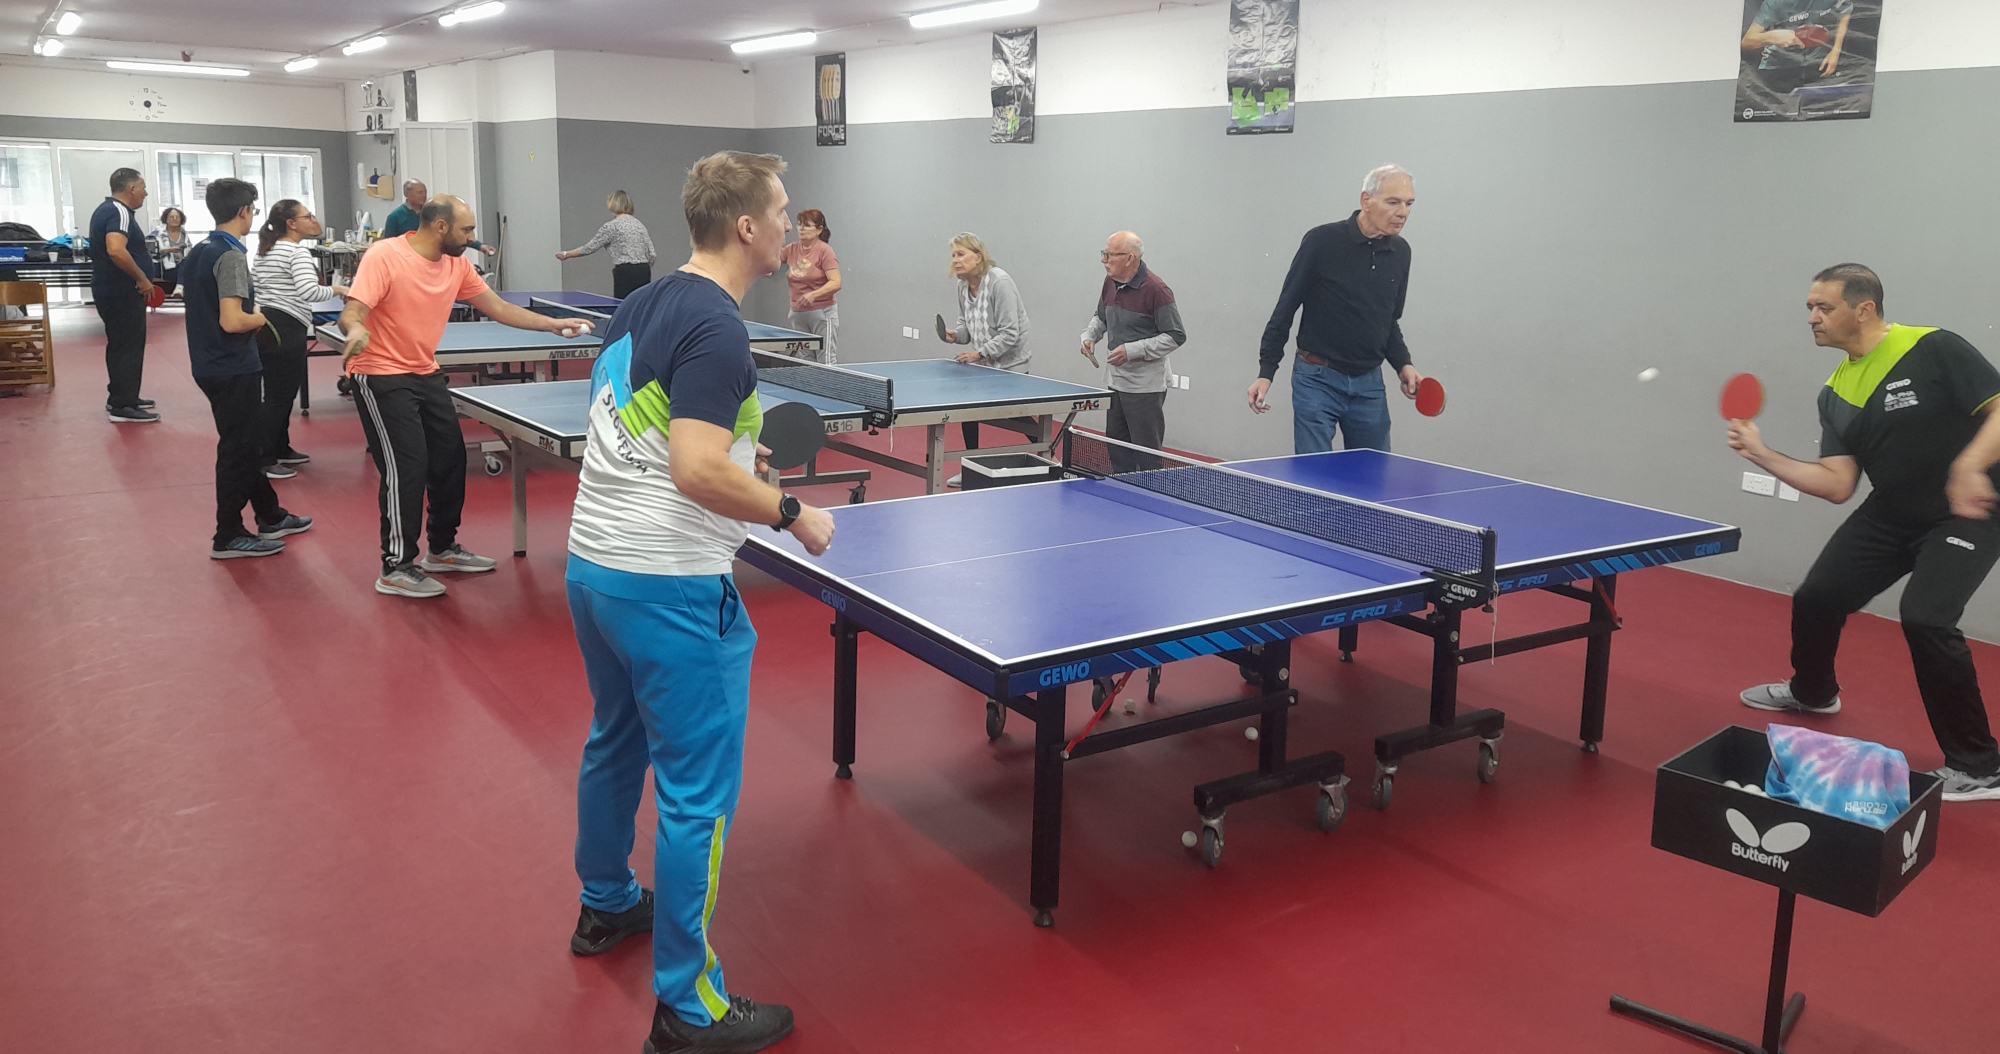 WORKSHOP: Table Tennis for Parkinson